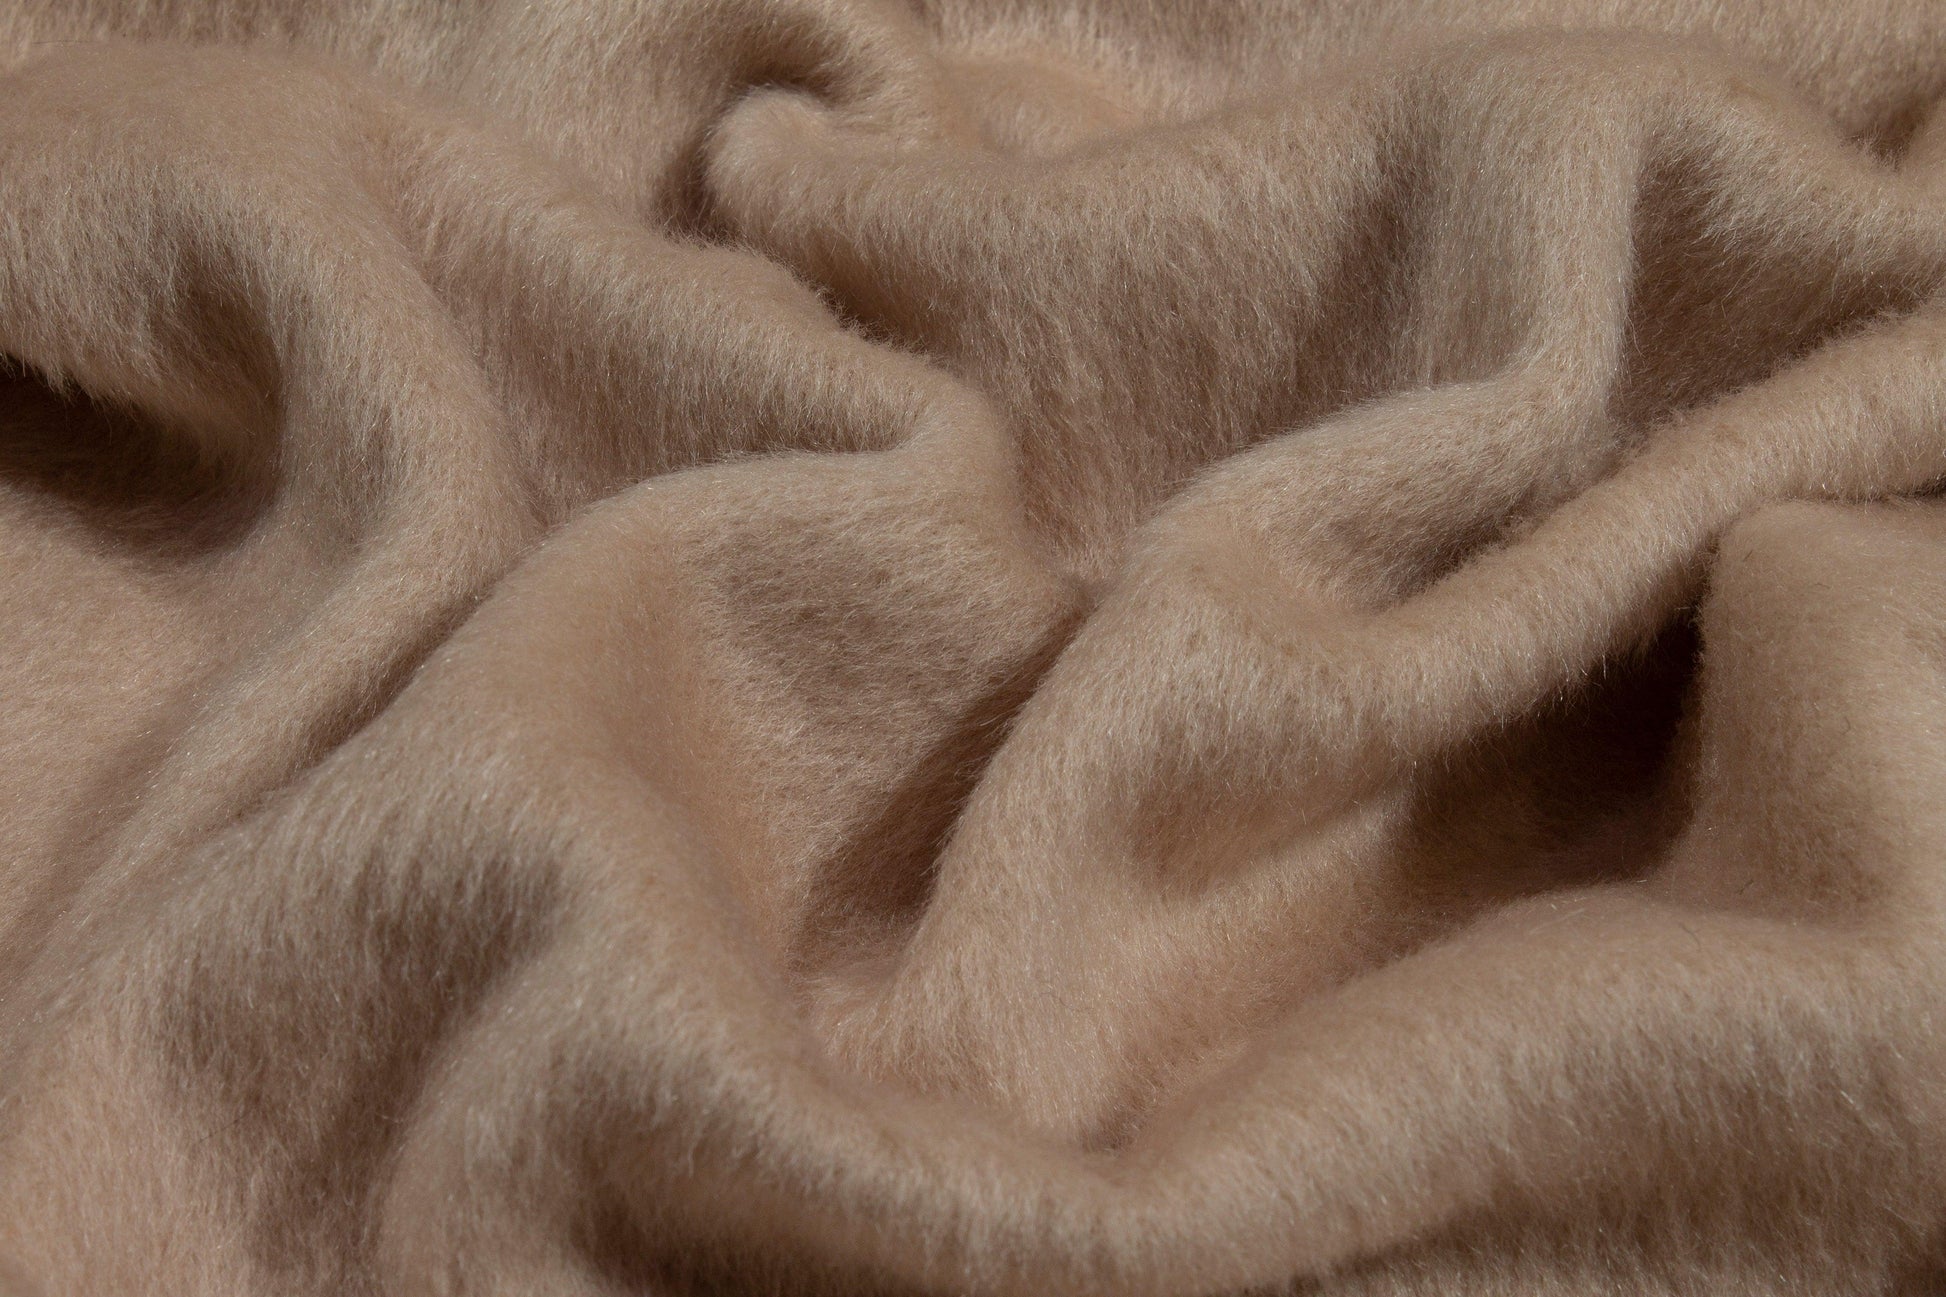 Nude Italian Mohair Wool - Prime Fabrics